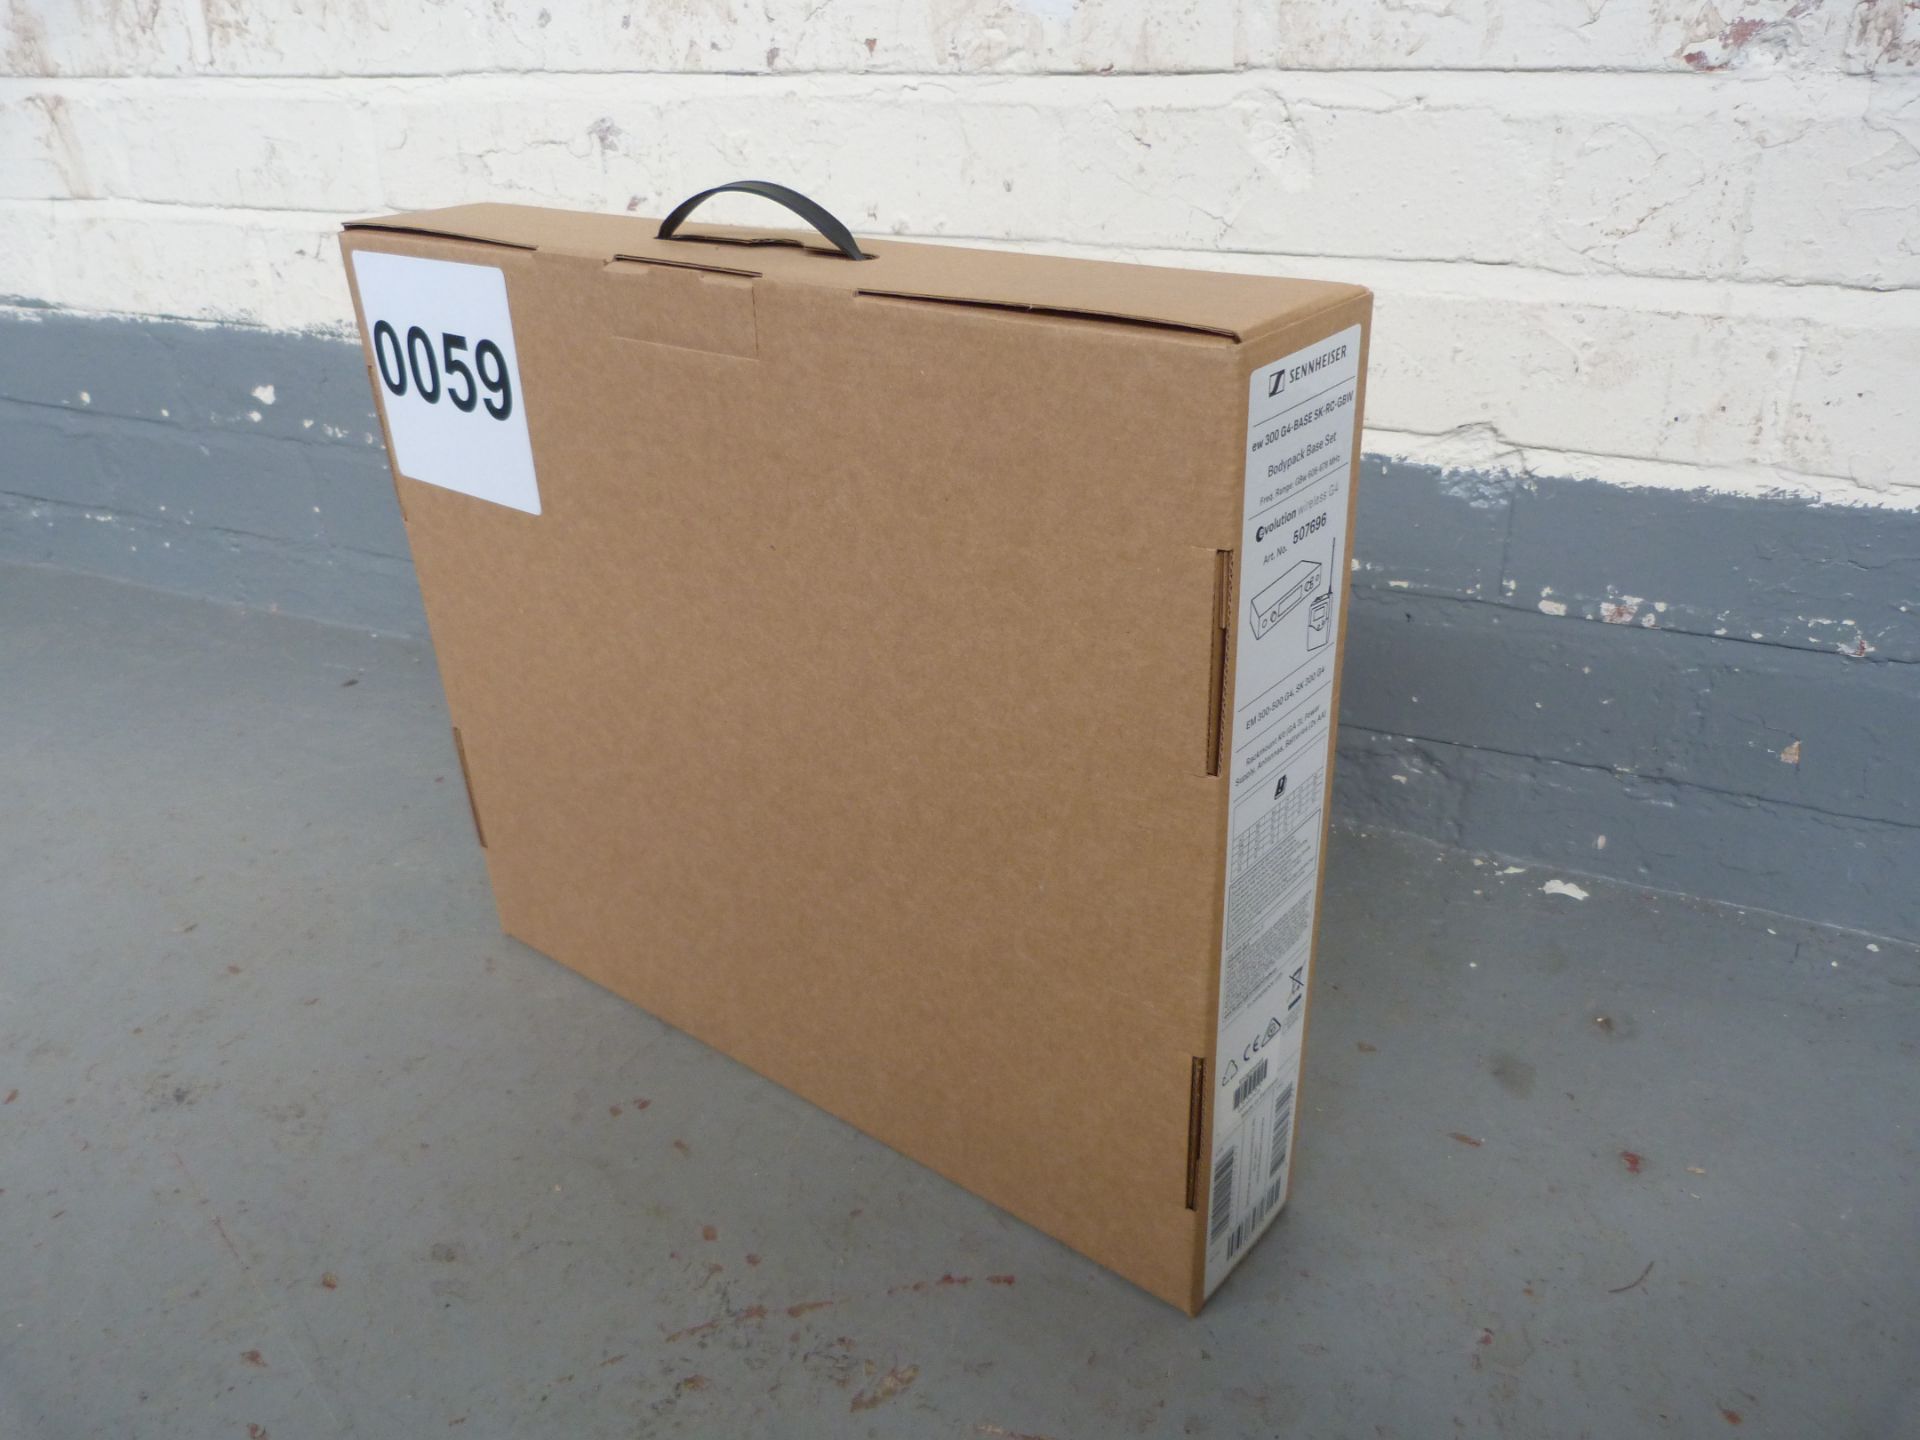 Sennheiser EW 300 G4-BASE SK-RC-GBW Bodypack Base Set 507696. In Cardboard. Serial No: 8178661169 - Image 4 of 5